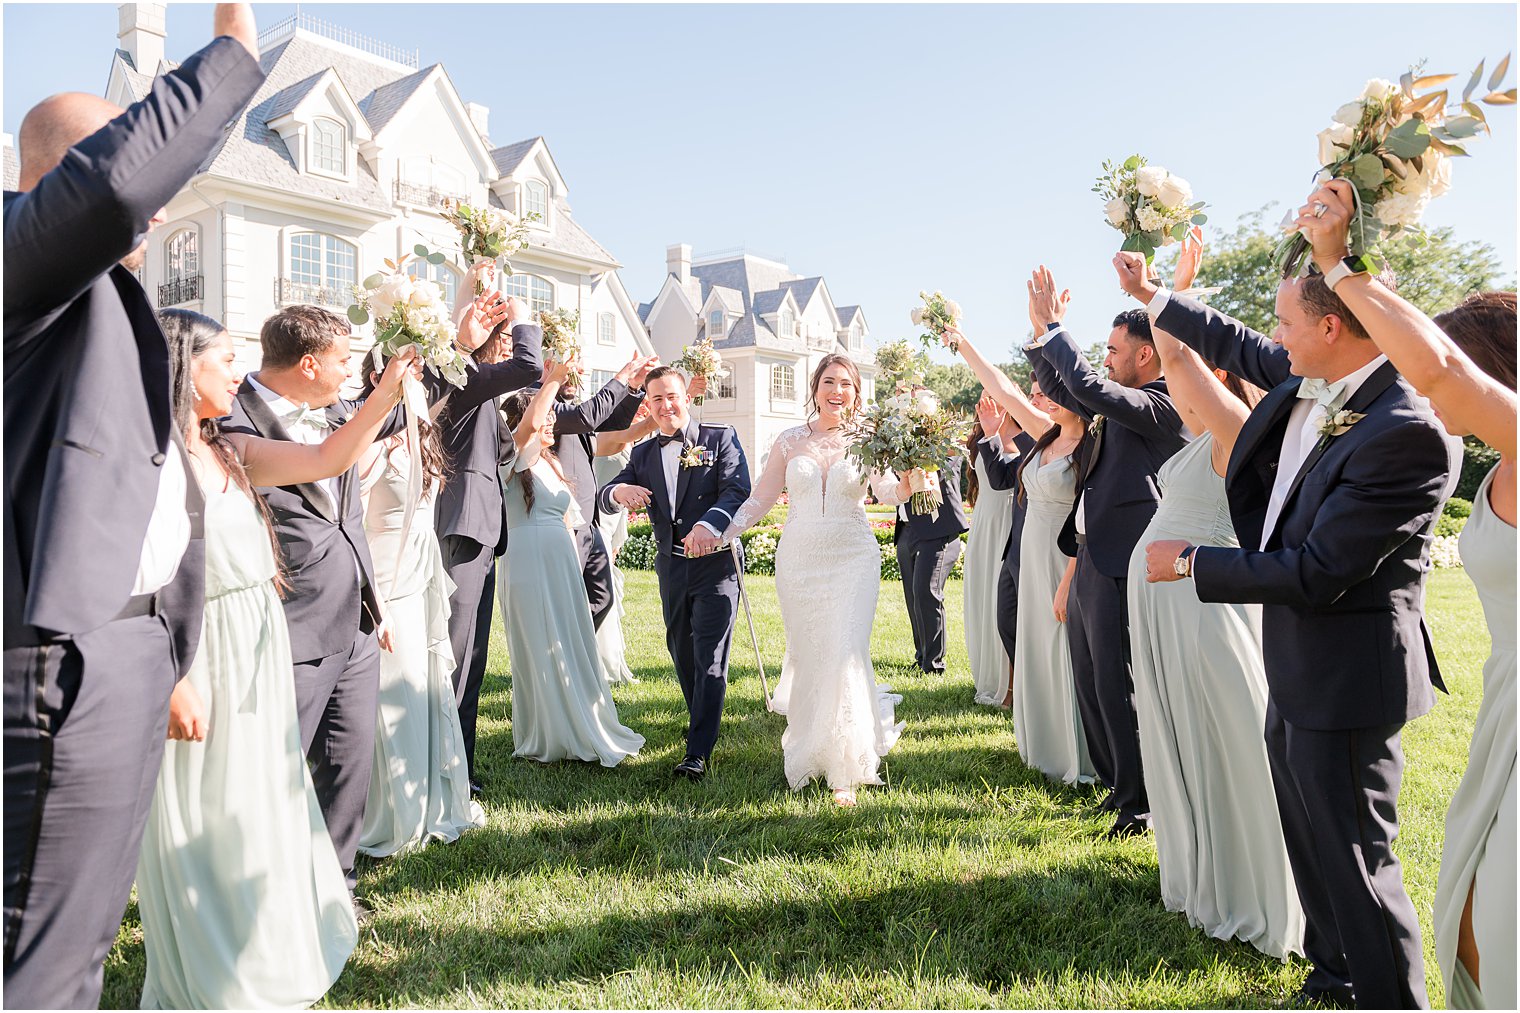 newlyweds smile walking between wedding party cheering on lawn